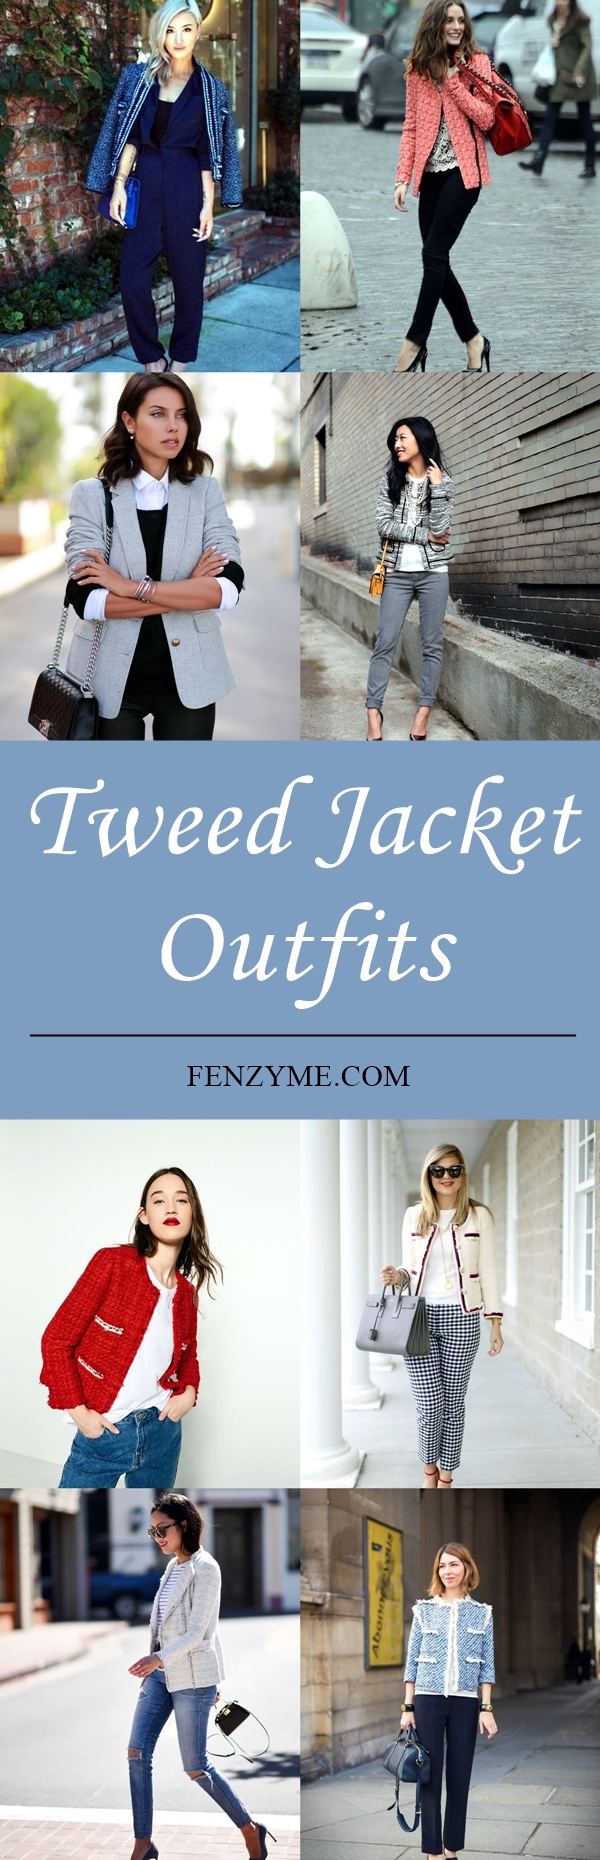 tweed-jacket-outfits-1-tile